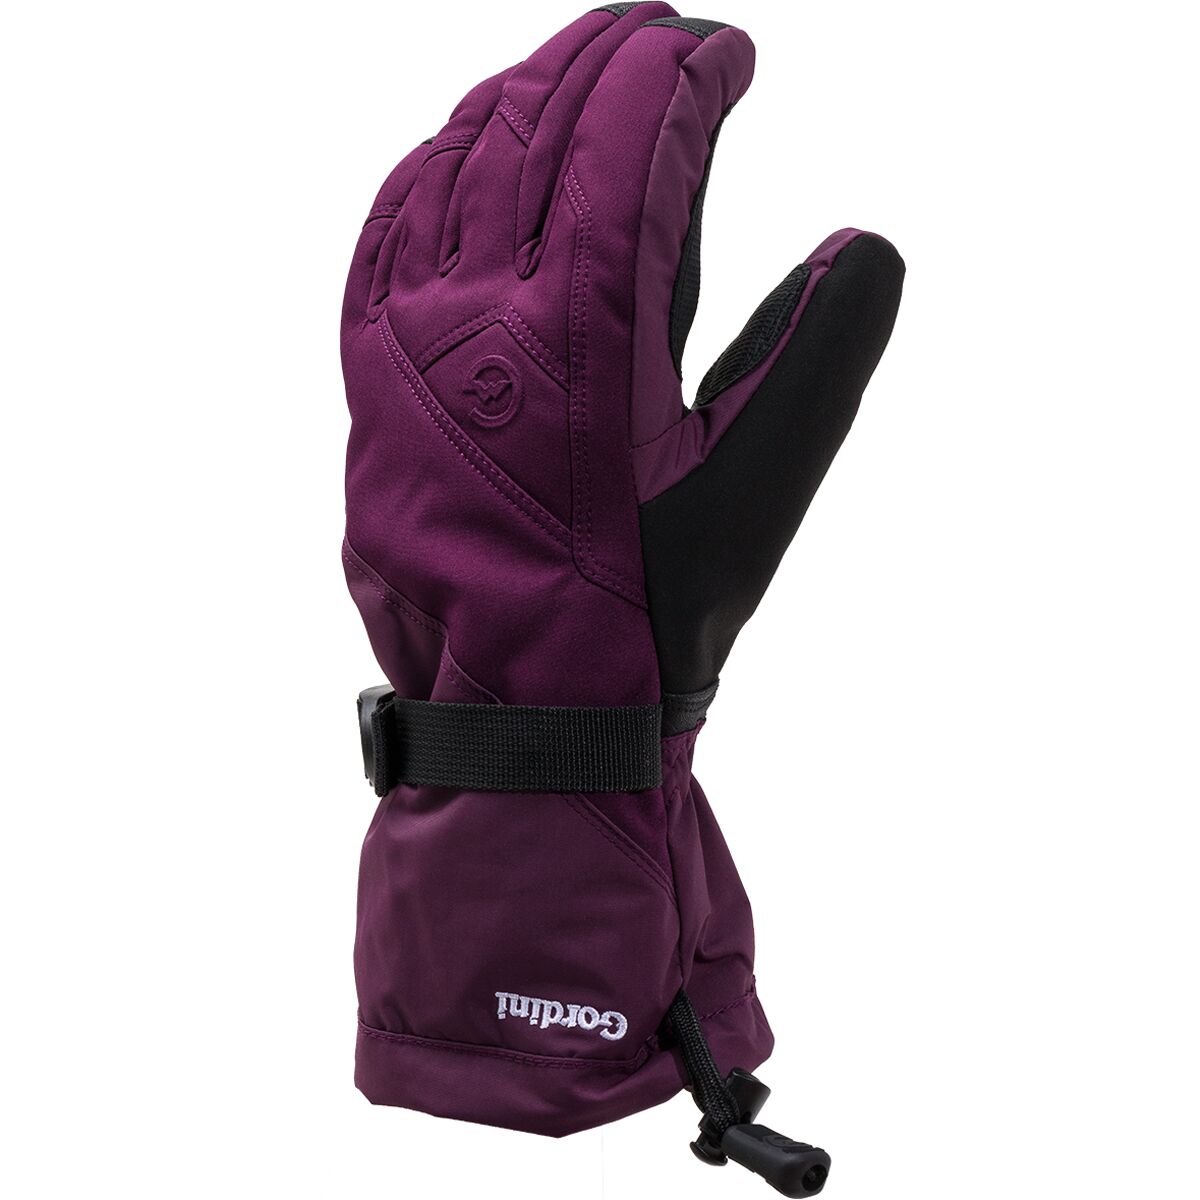 Gordini AquaBloc Down Gauntlet IV Glove - Women's